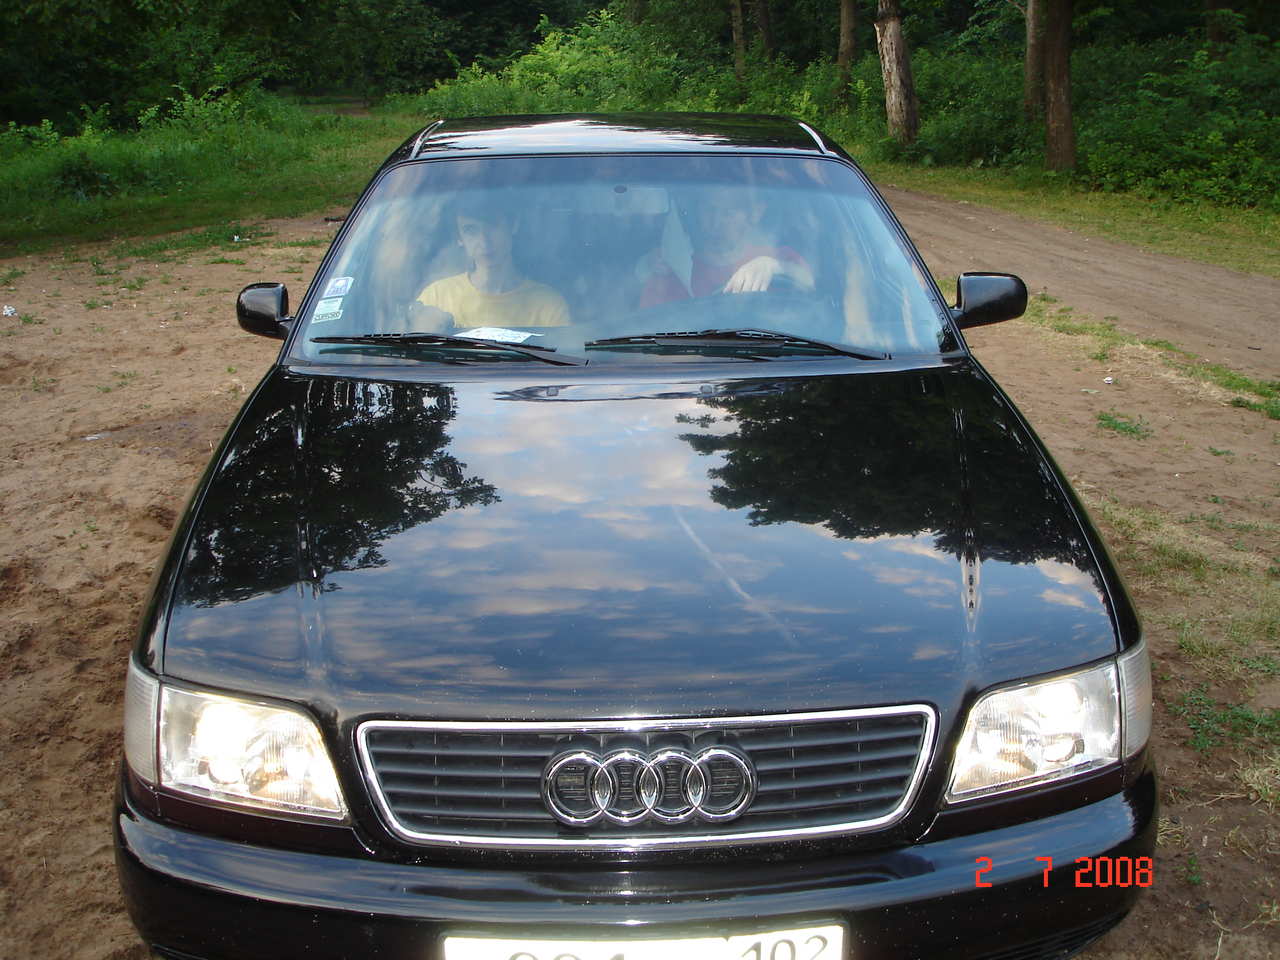 1996 Audi A6